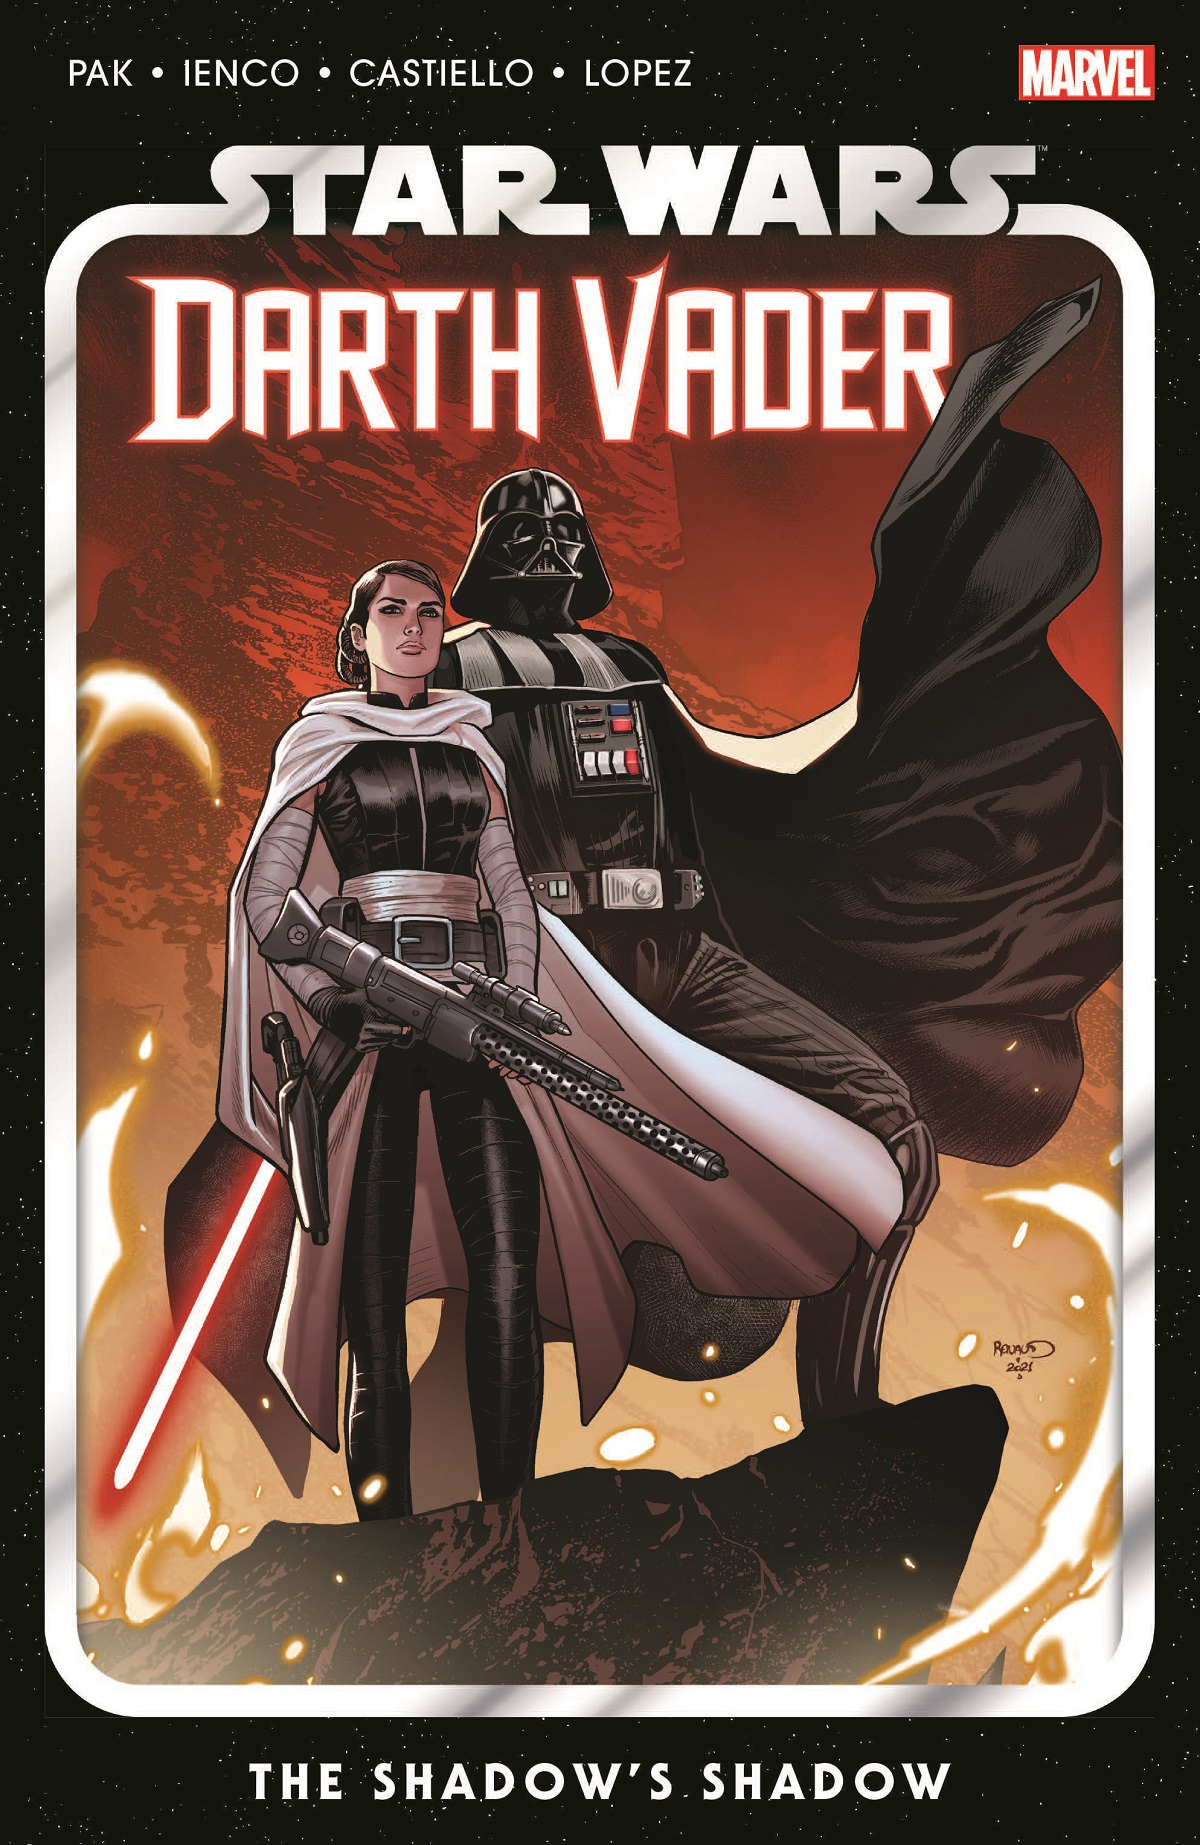 Star Wars: Darth Vader, Vol. 5: The Shadow's Shadow by Greg Pak